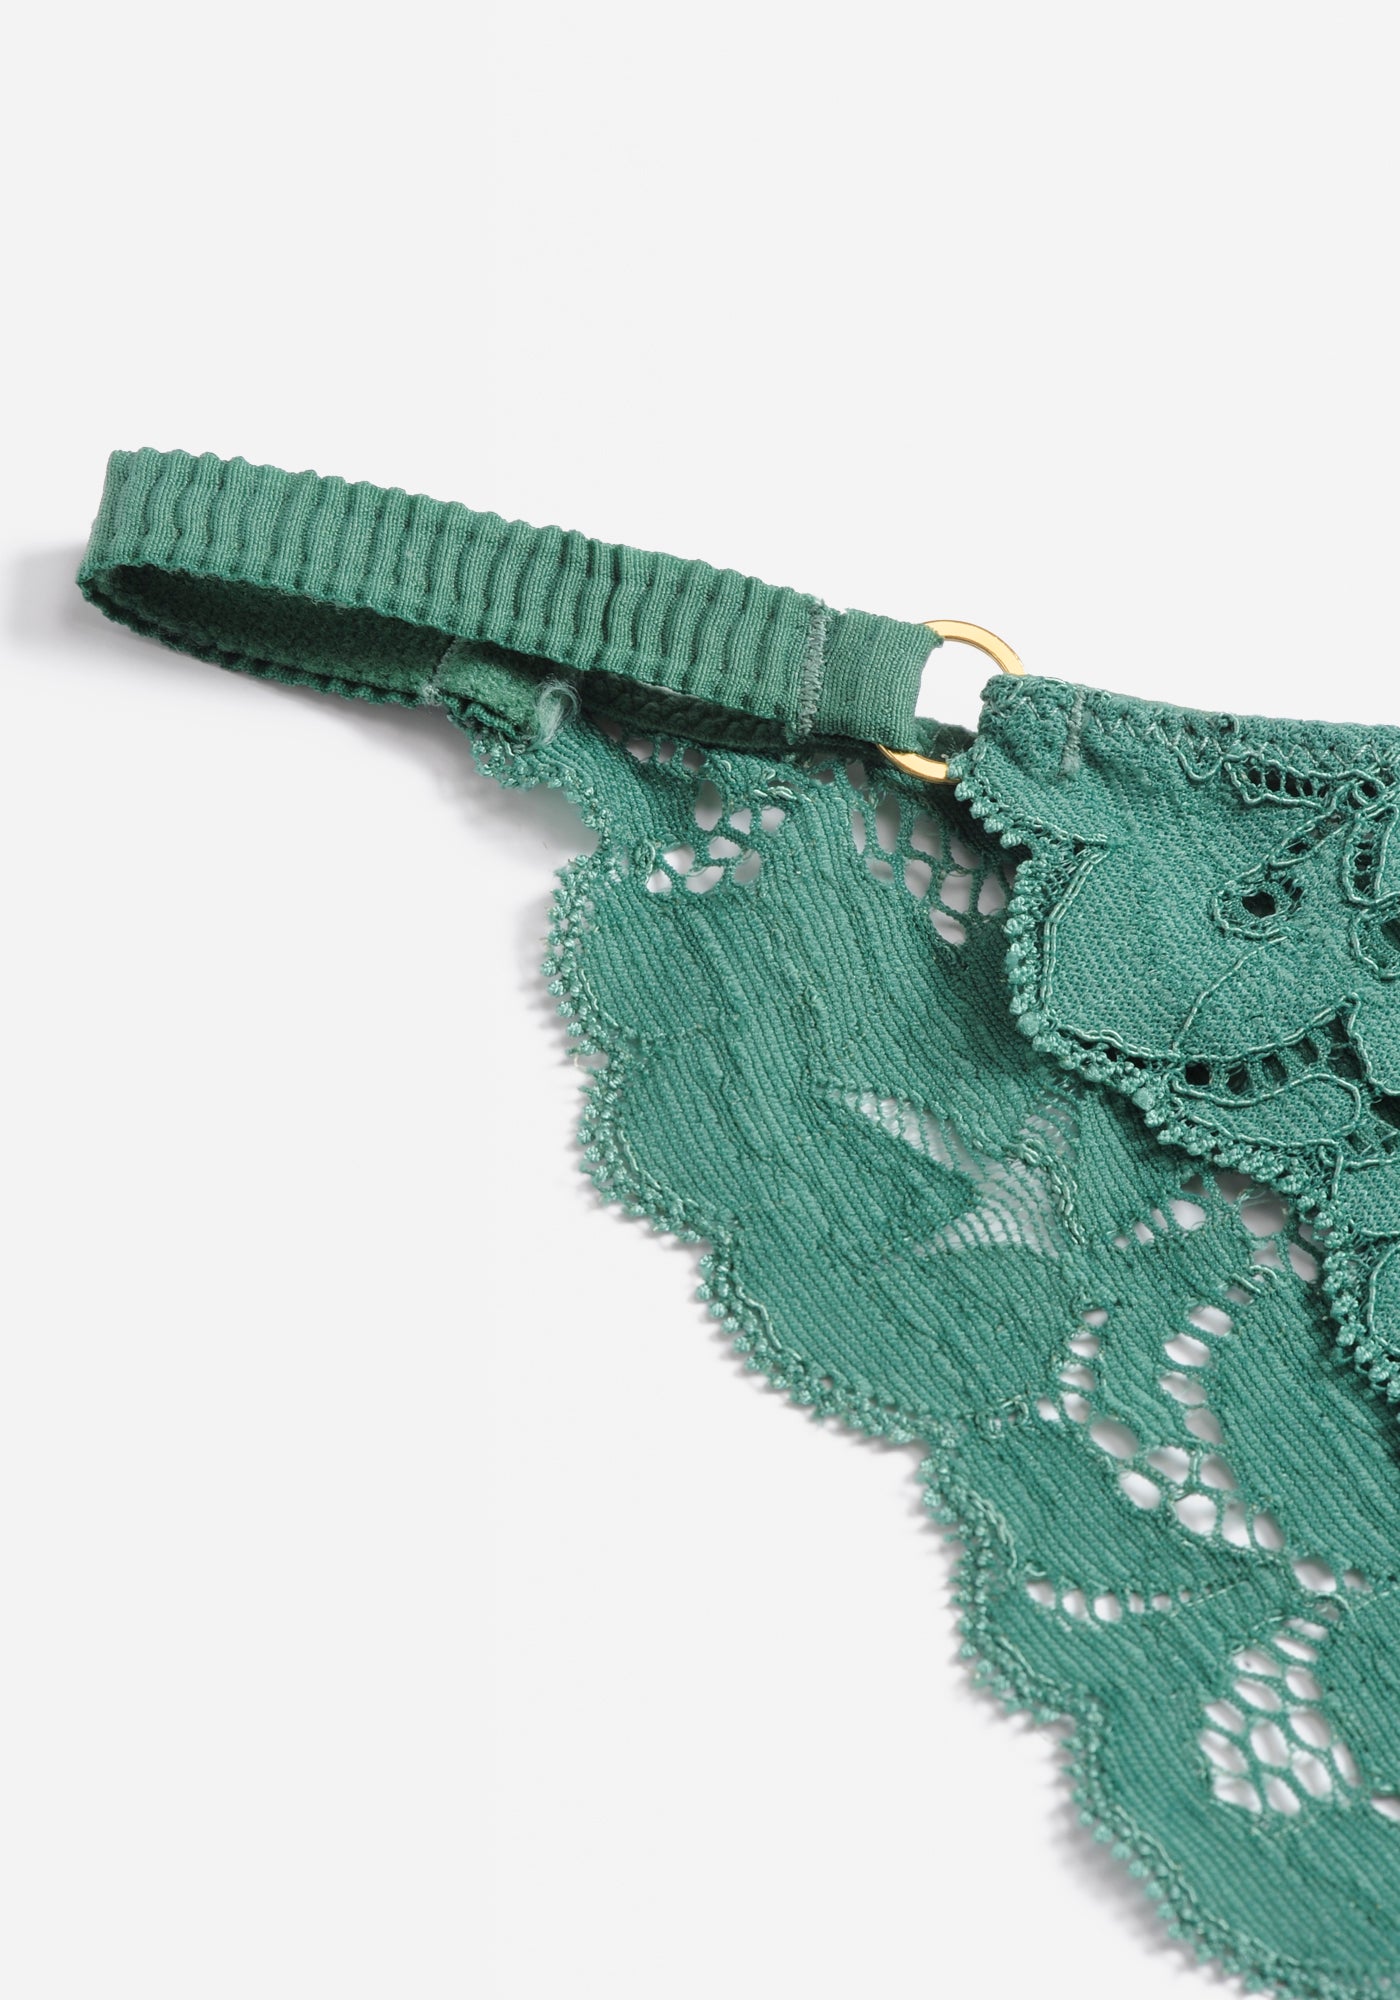 Sofia green lace panties